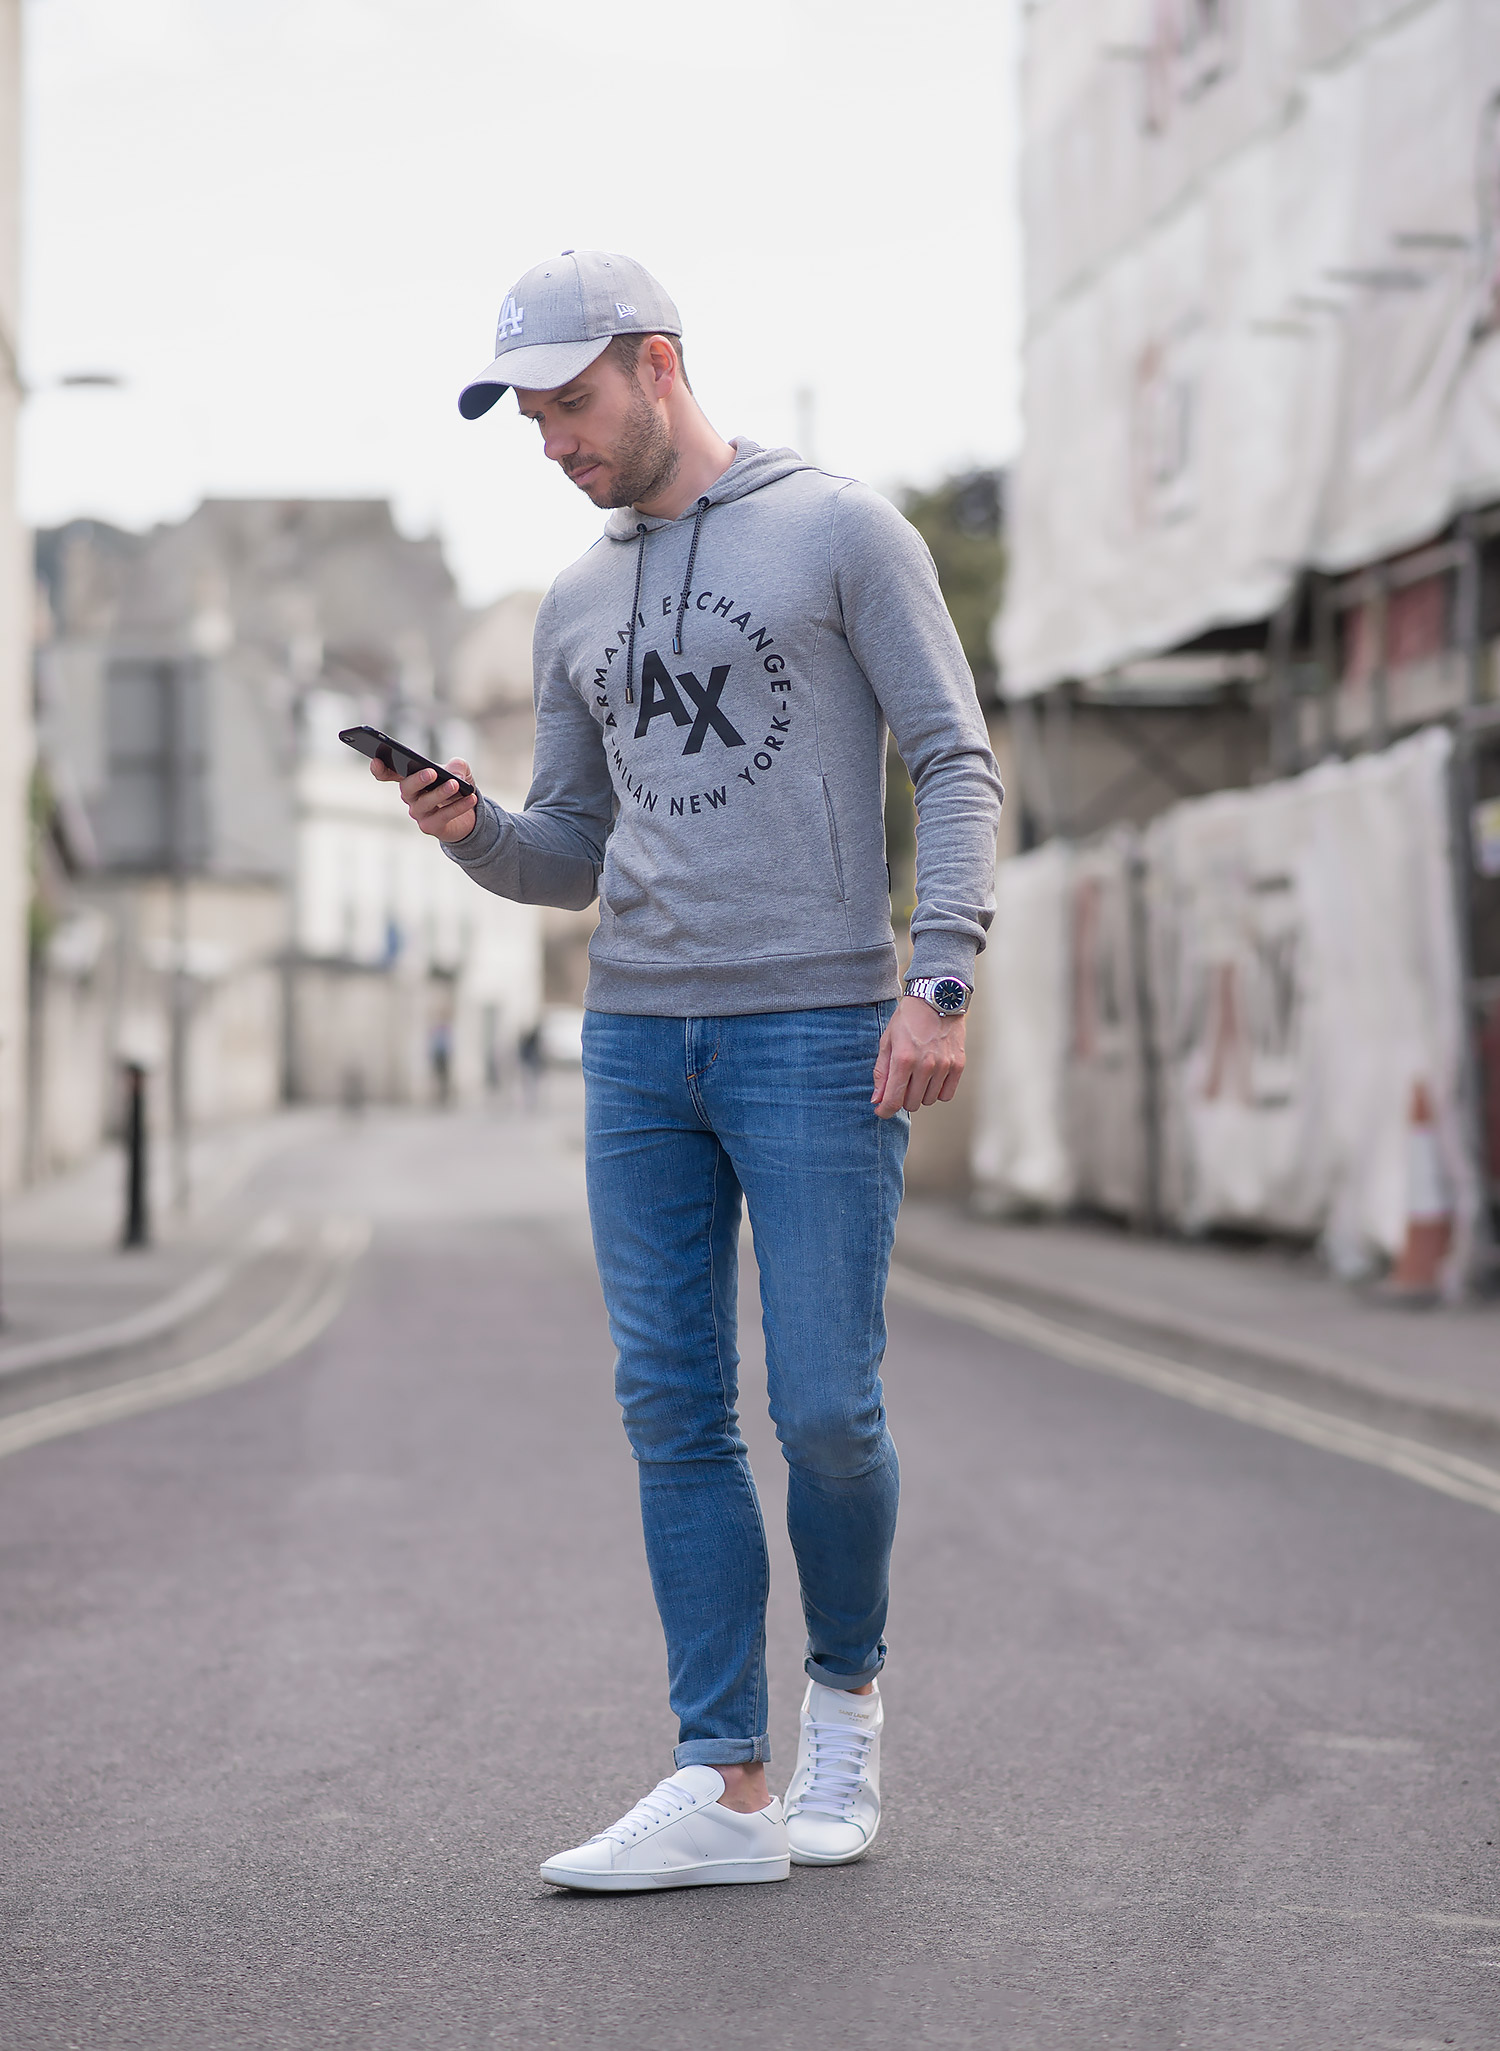 Armani Sweatshirt And Jeans - Your Average Guy